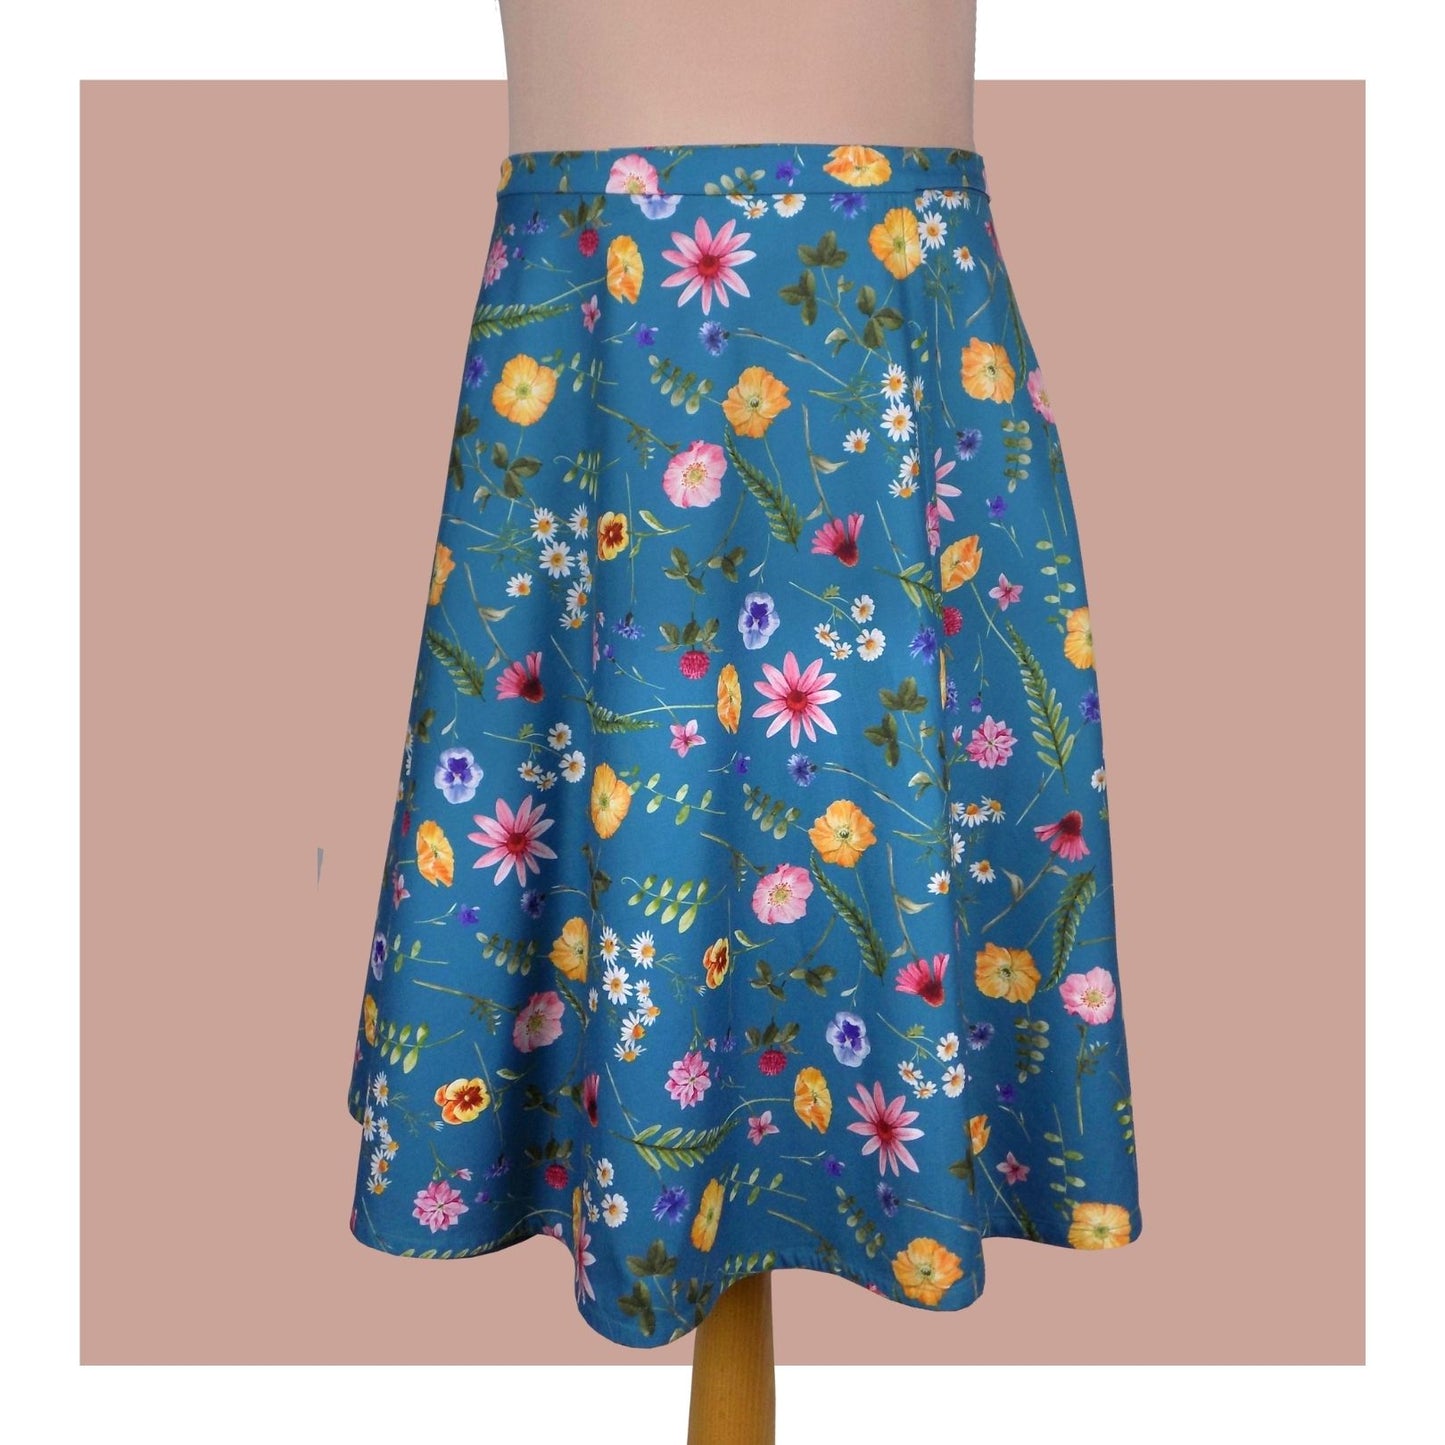 Cotton skirt - Wild flowers on teal